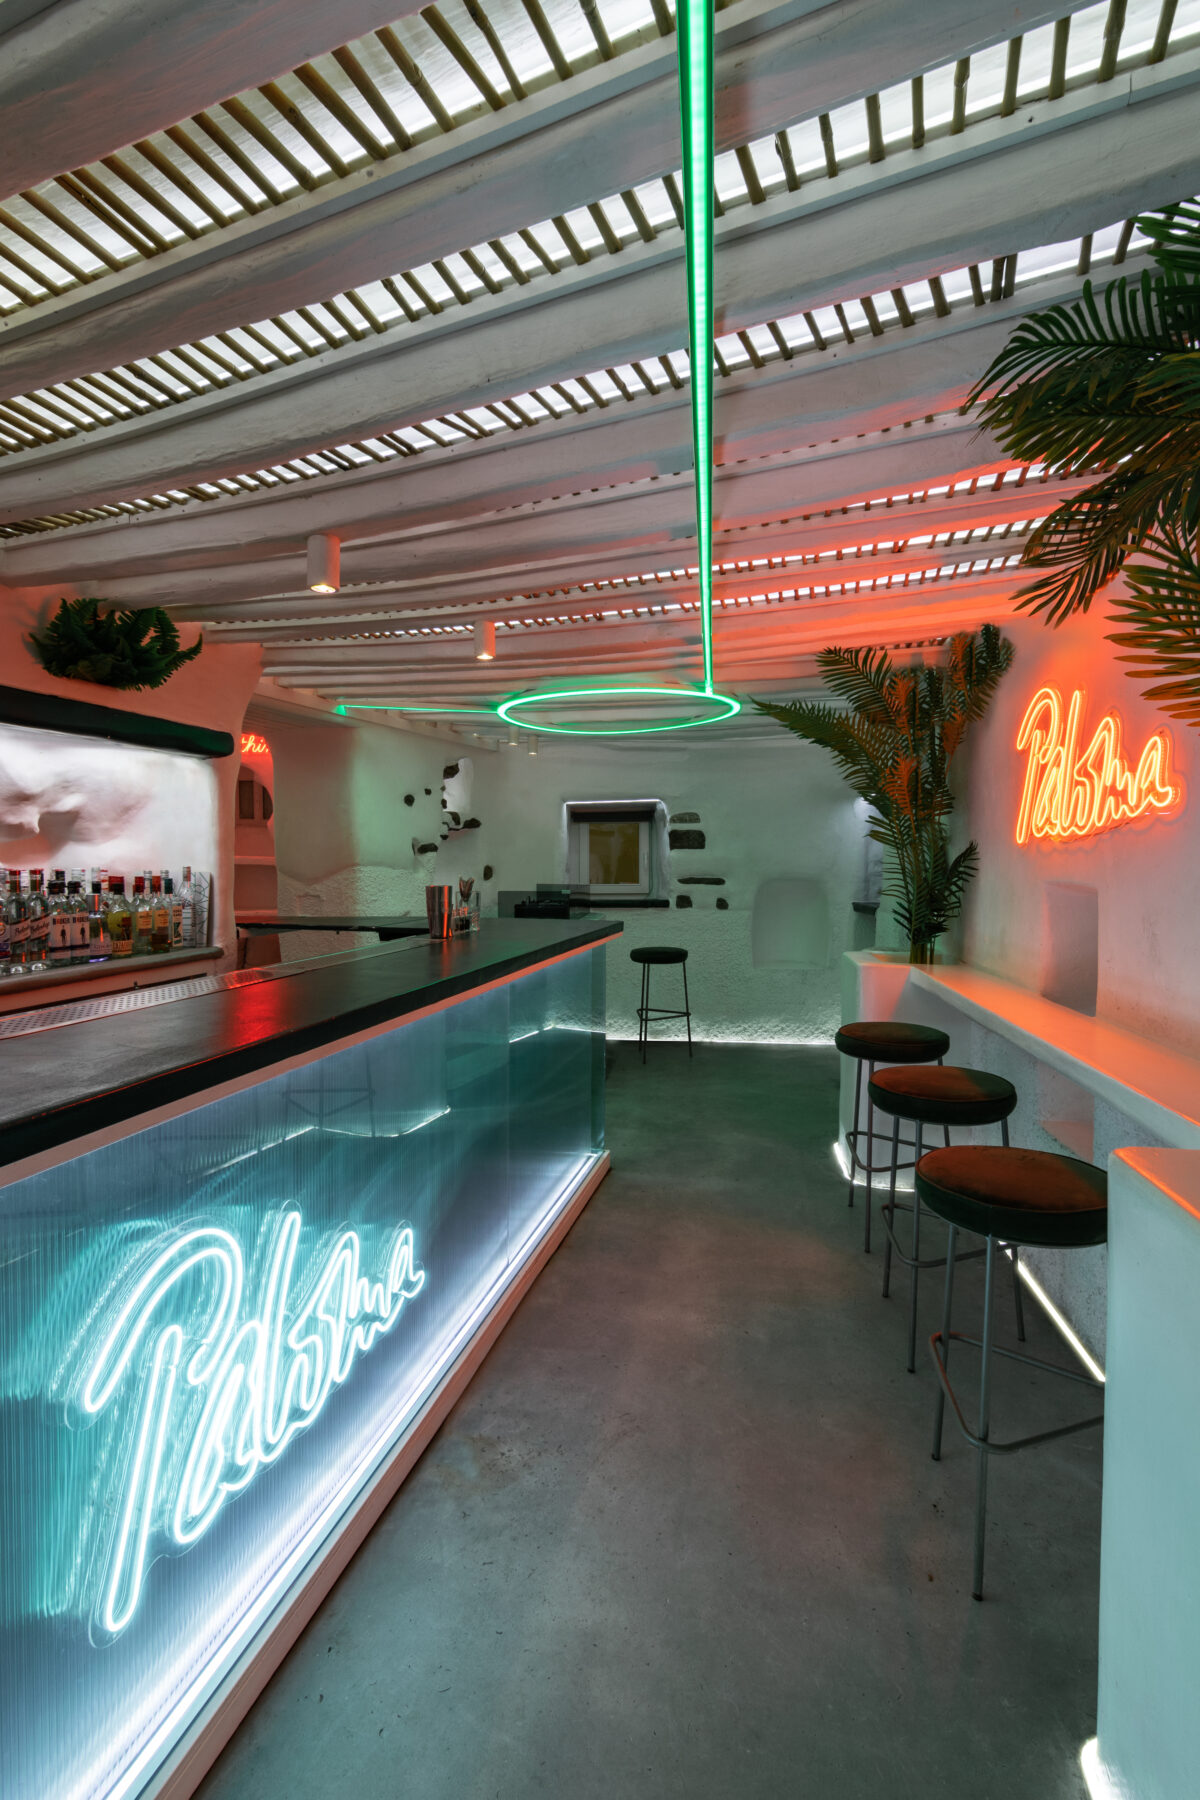 Archisearch ADD Architecture studio designed Paloma bar in Mykonos island.